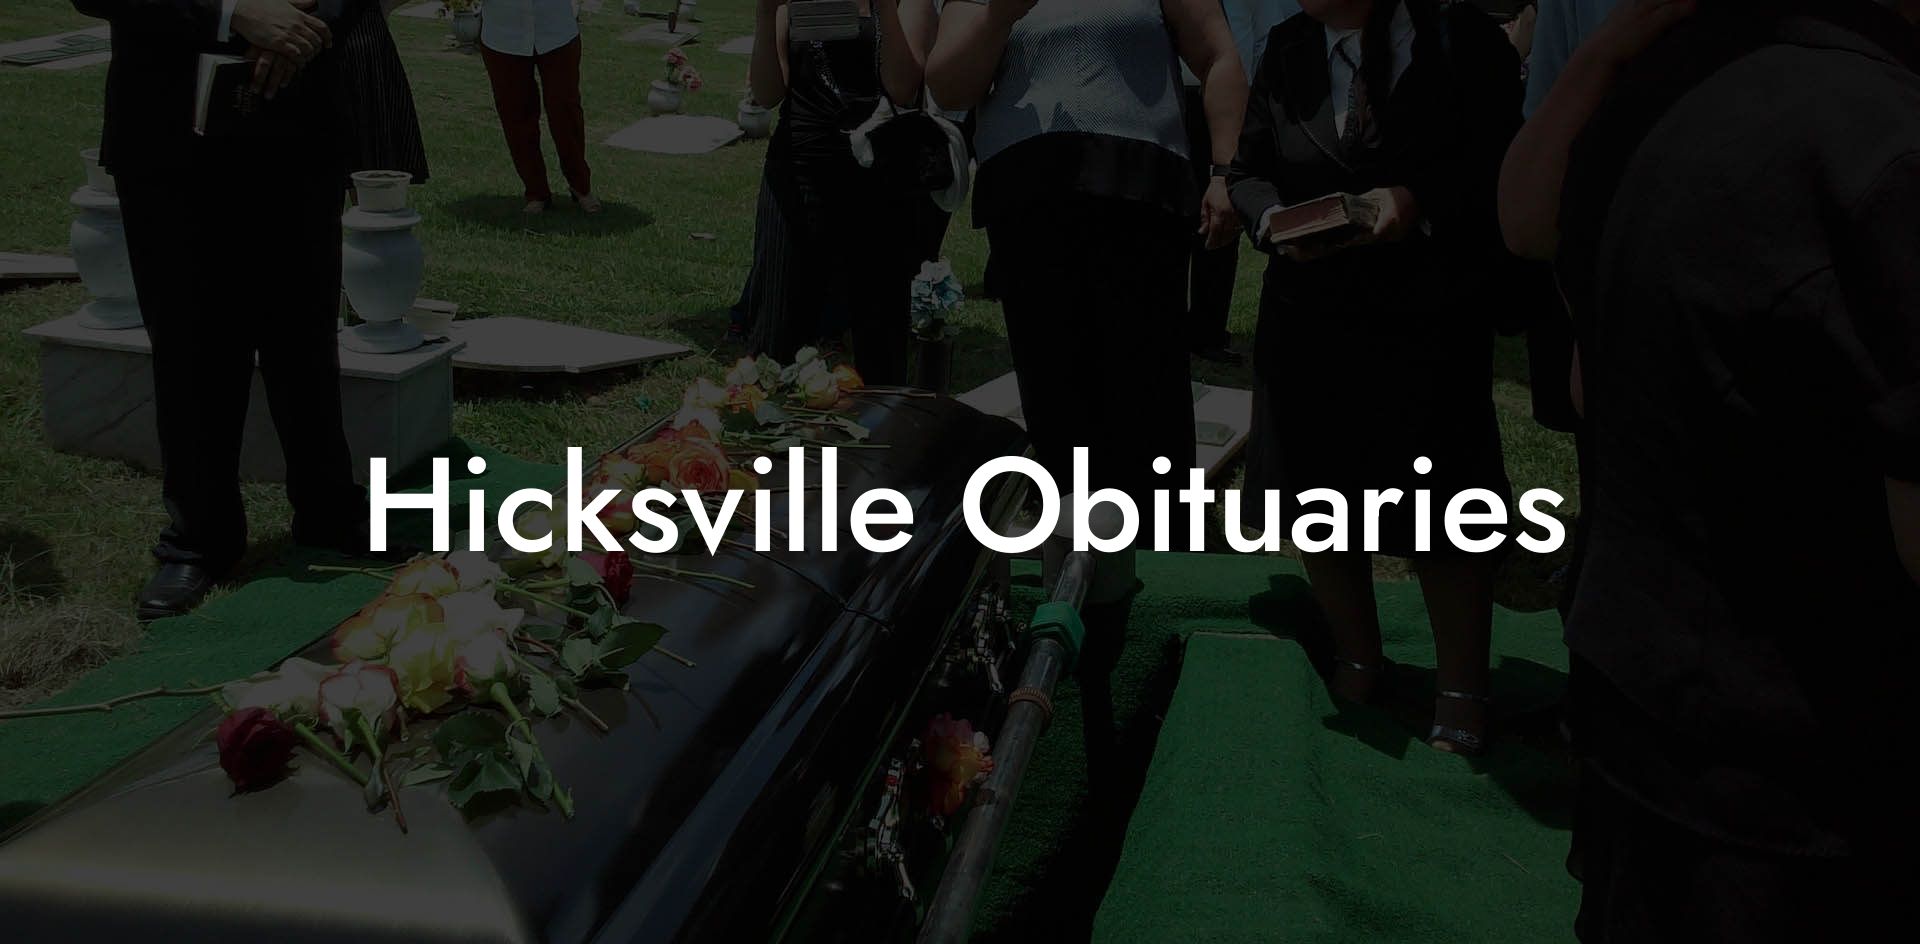 Hicksville Obituaries